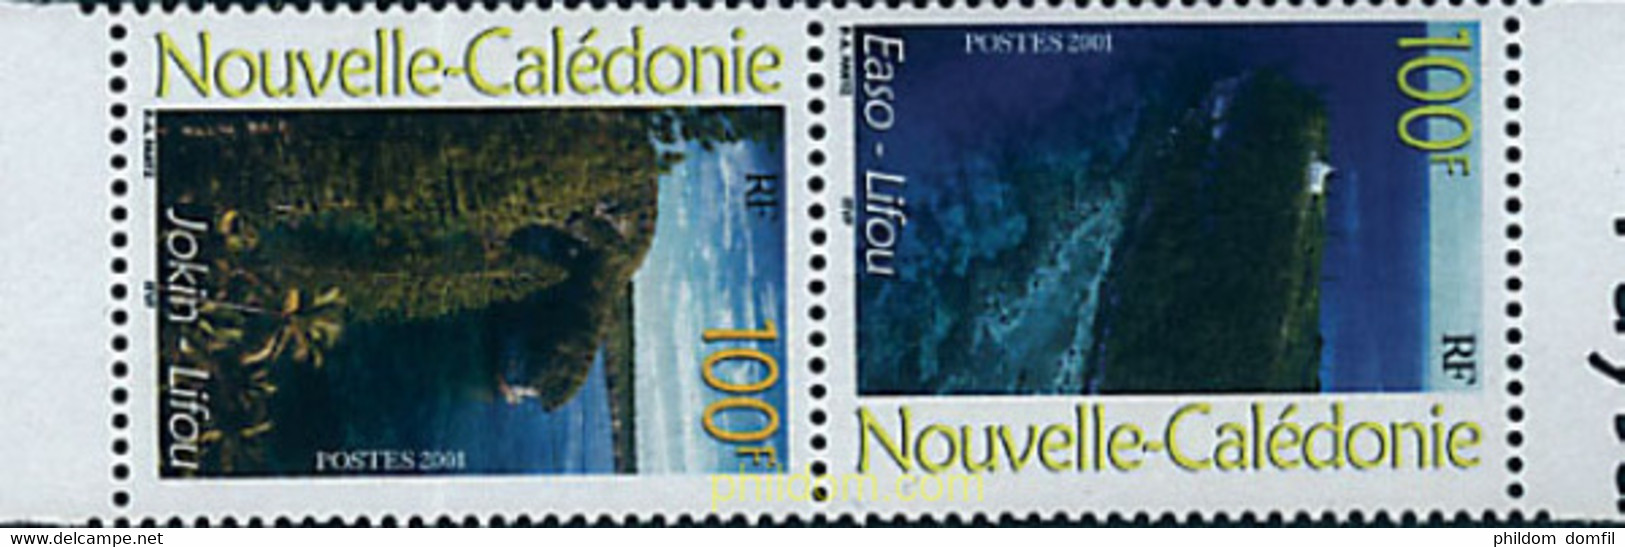 4678 MNH NUEVA CALEDONIA 2001 PAISAJES REGIONALES - Usados